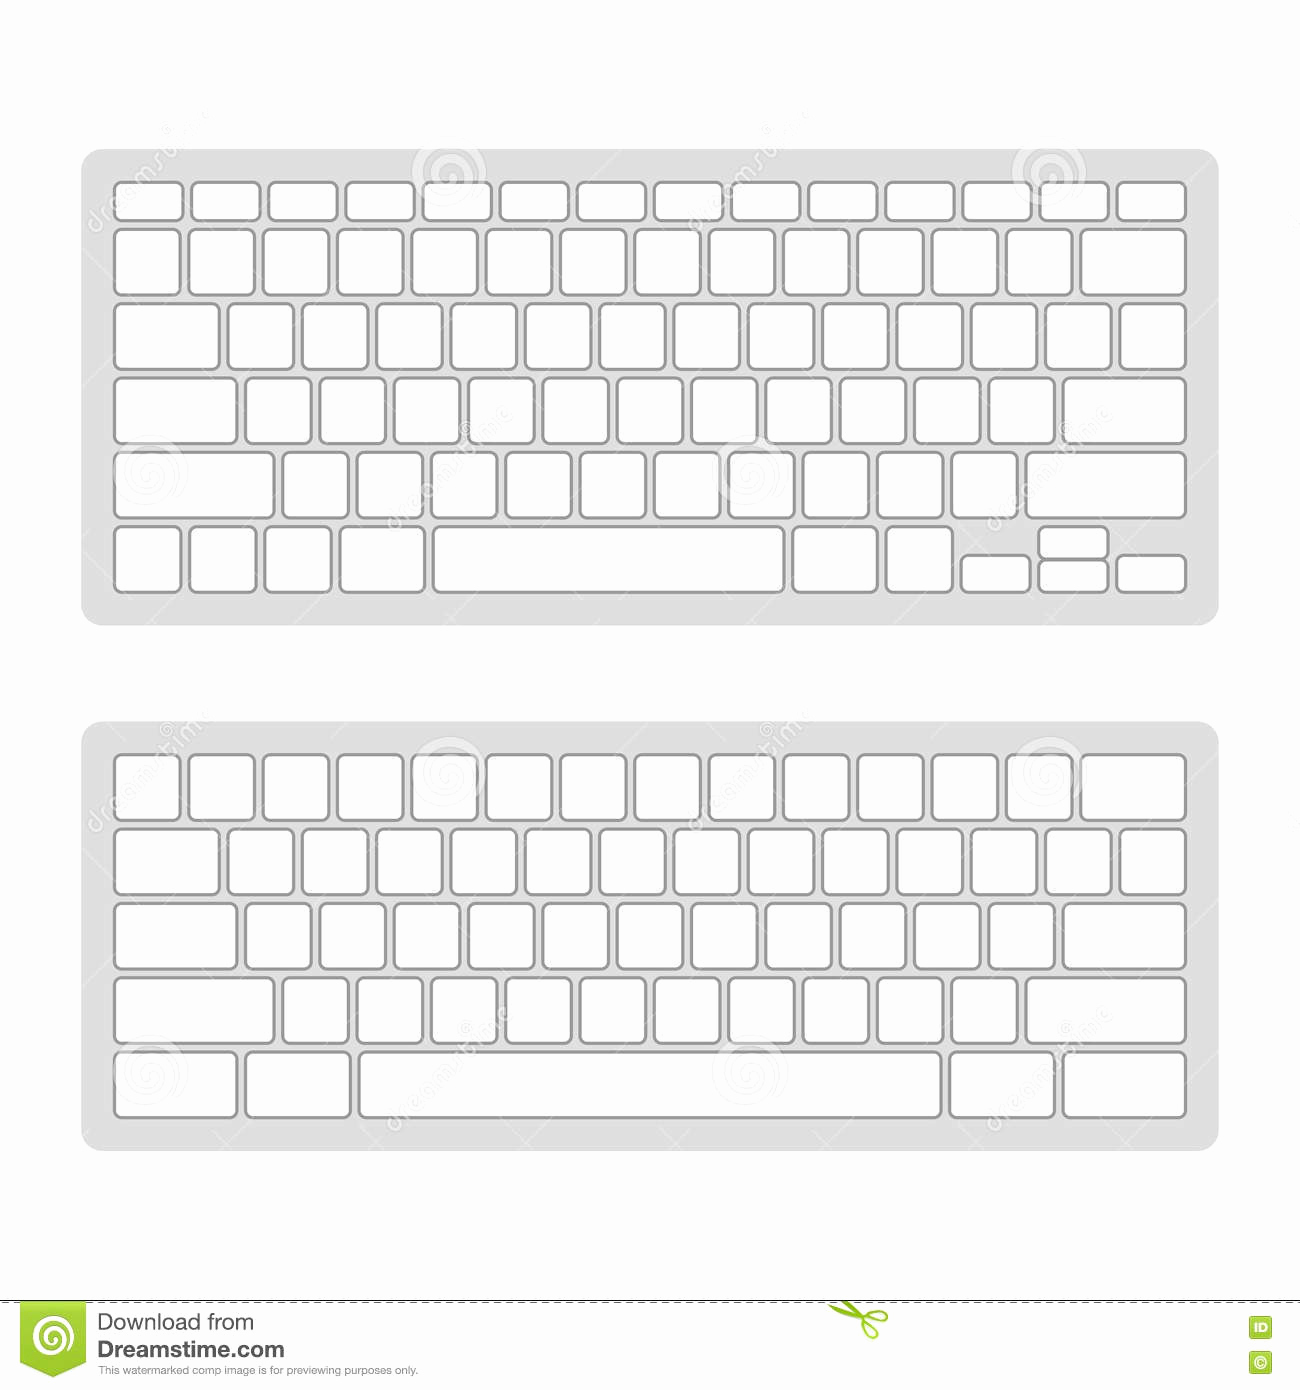 Free Printable Computer Keyboarding Worksheets Unique Puter Keyboard Blank Template Set Vector Stock Vector